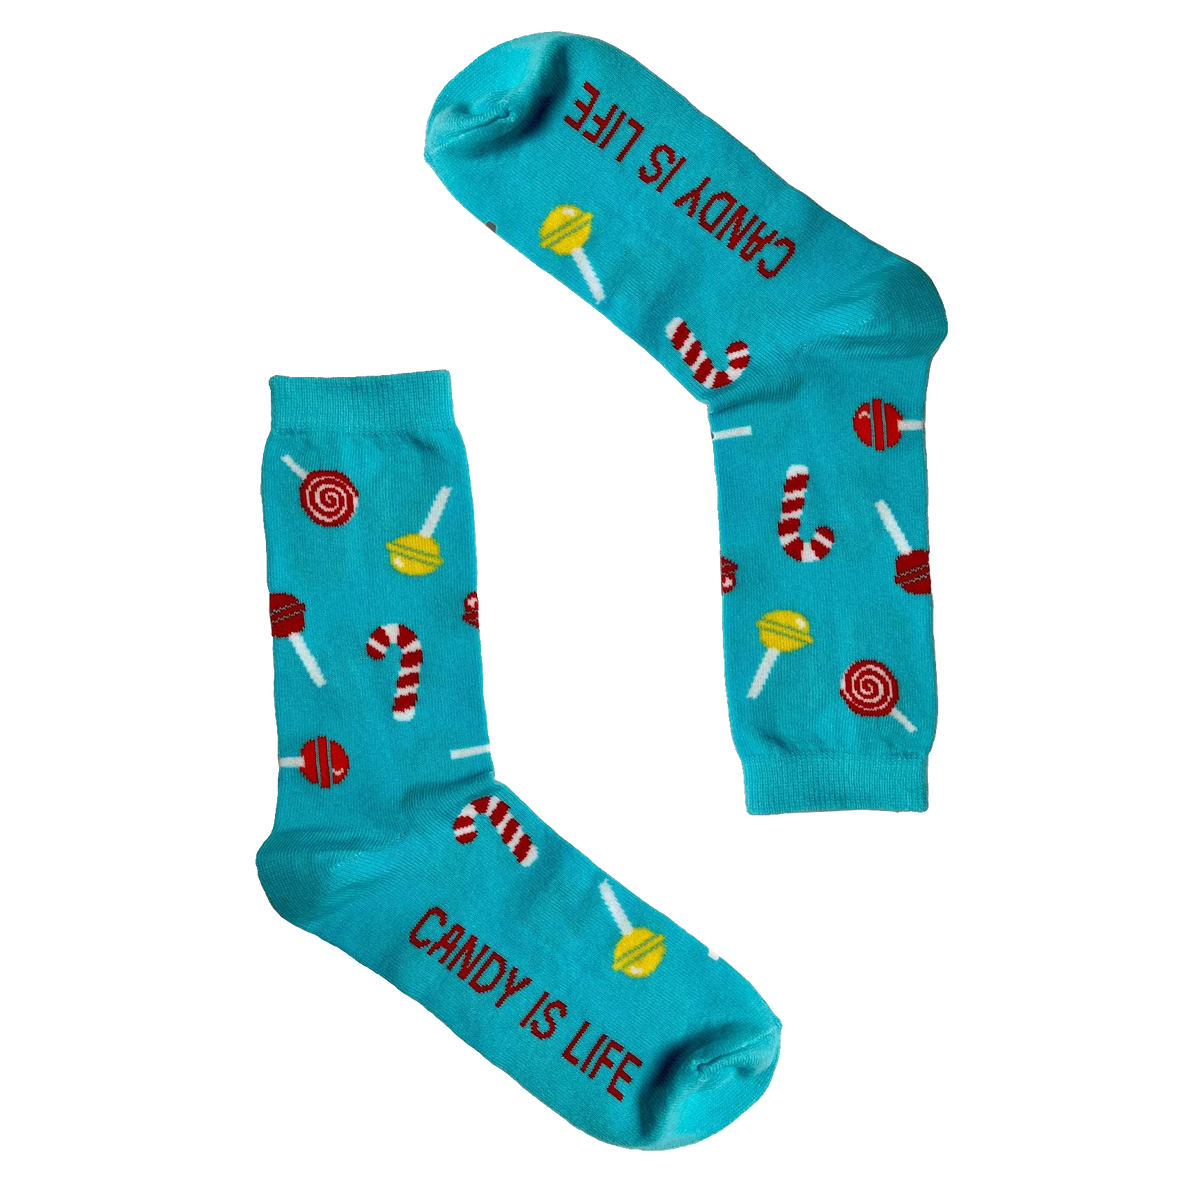 Candy Socks - 4 Pairs